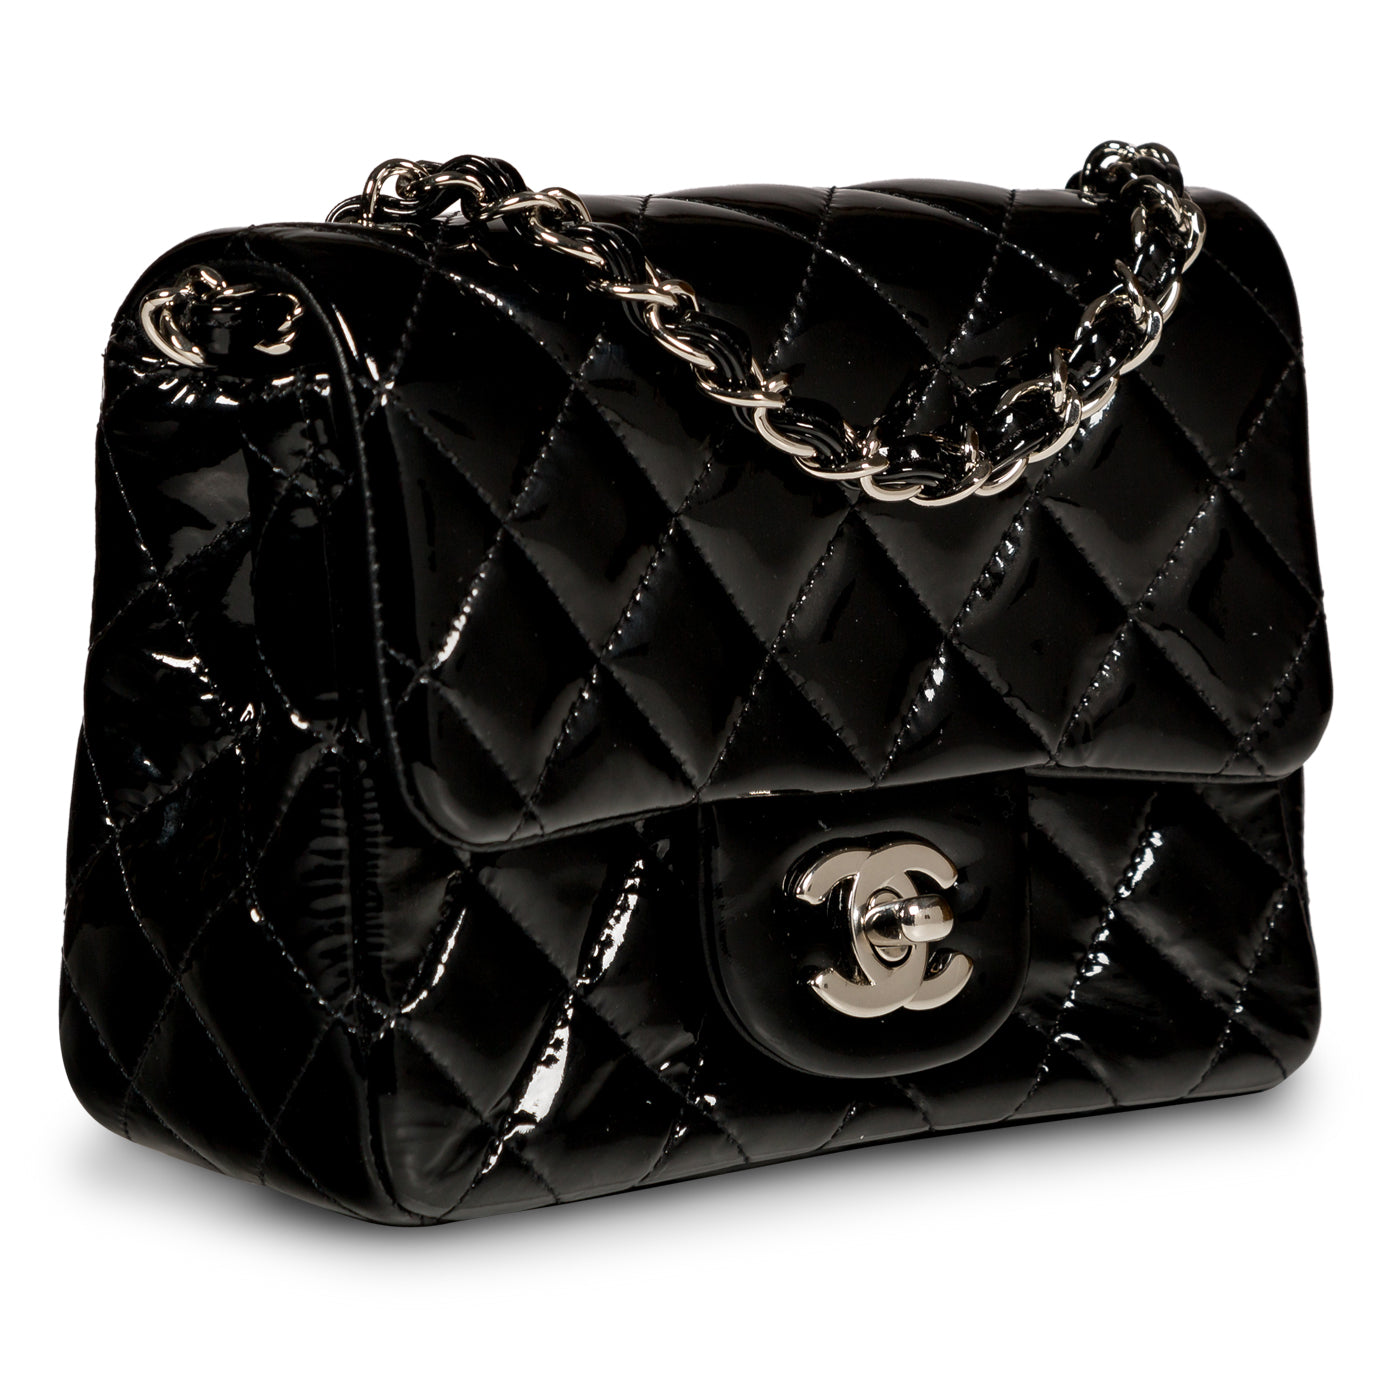 Chanel - Mini Square Classic Flap Bag - Black Patent - SHW - Pre-Loved